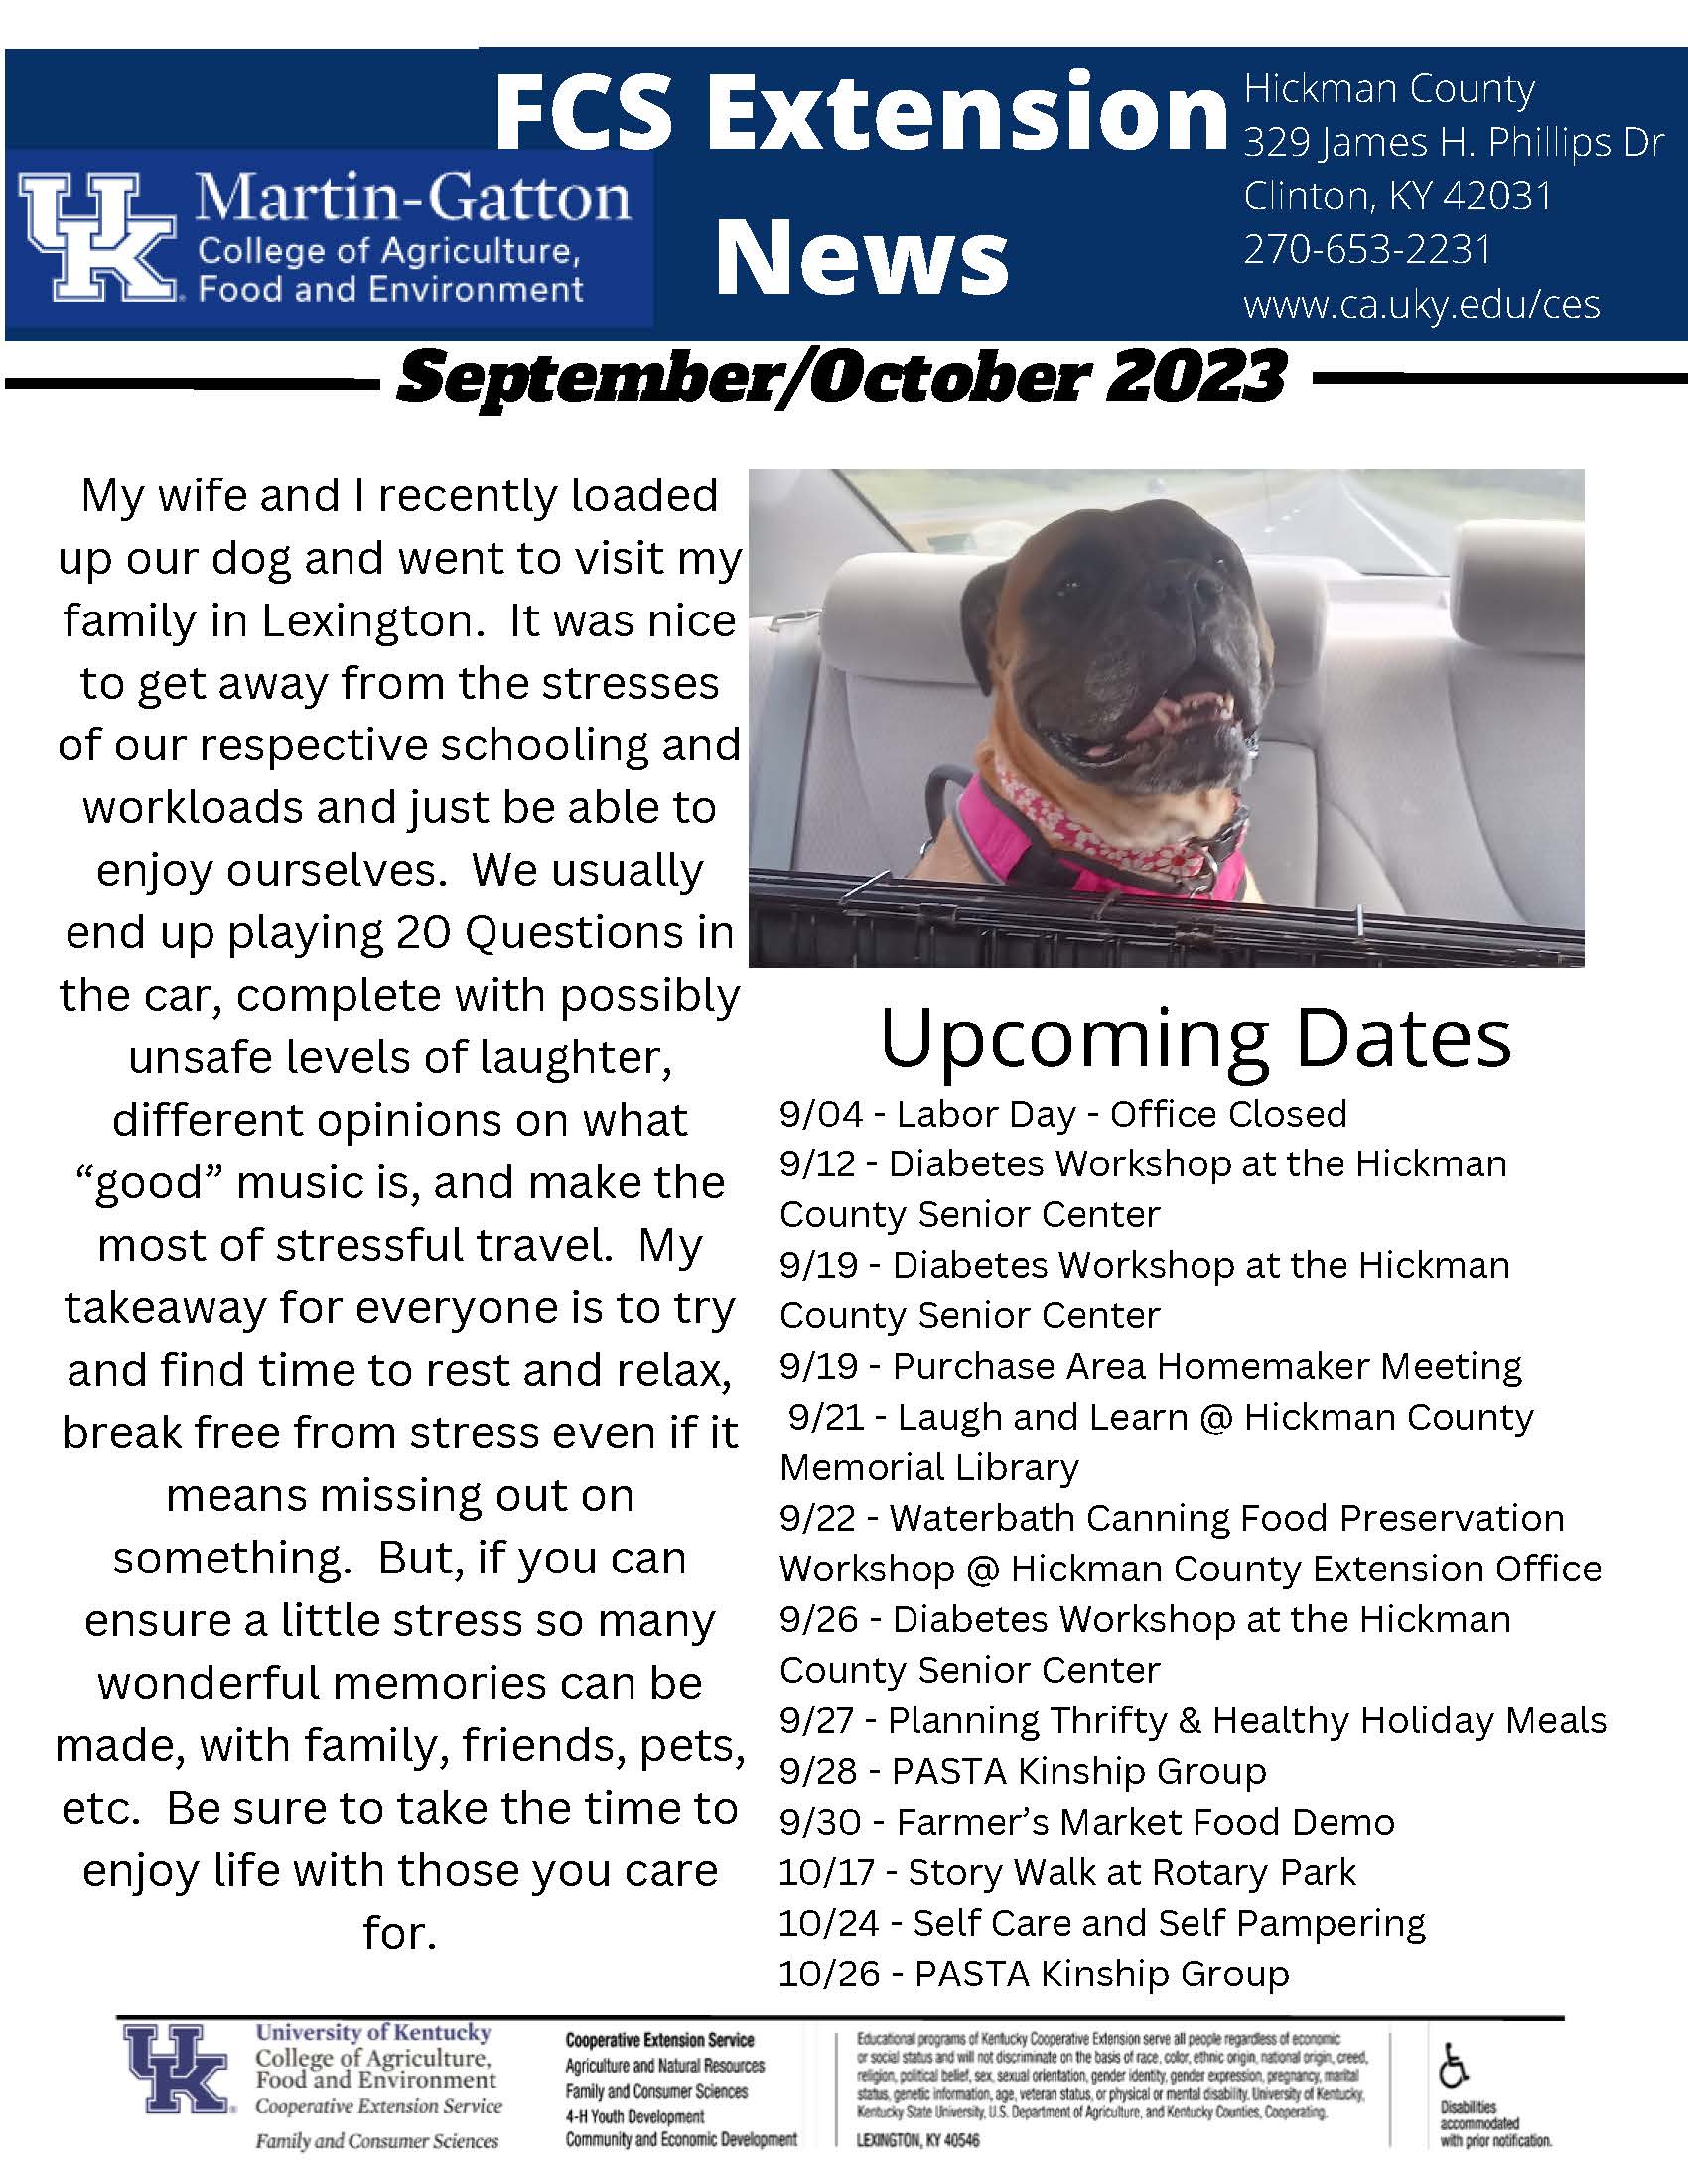 September/October FCS Newsletter 2023